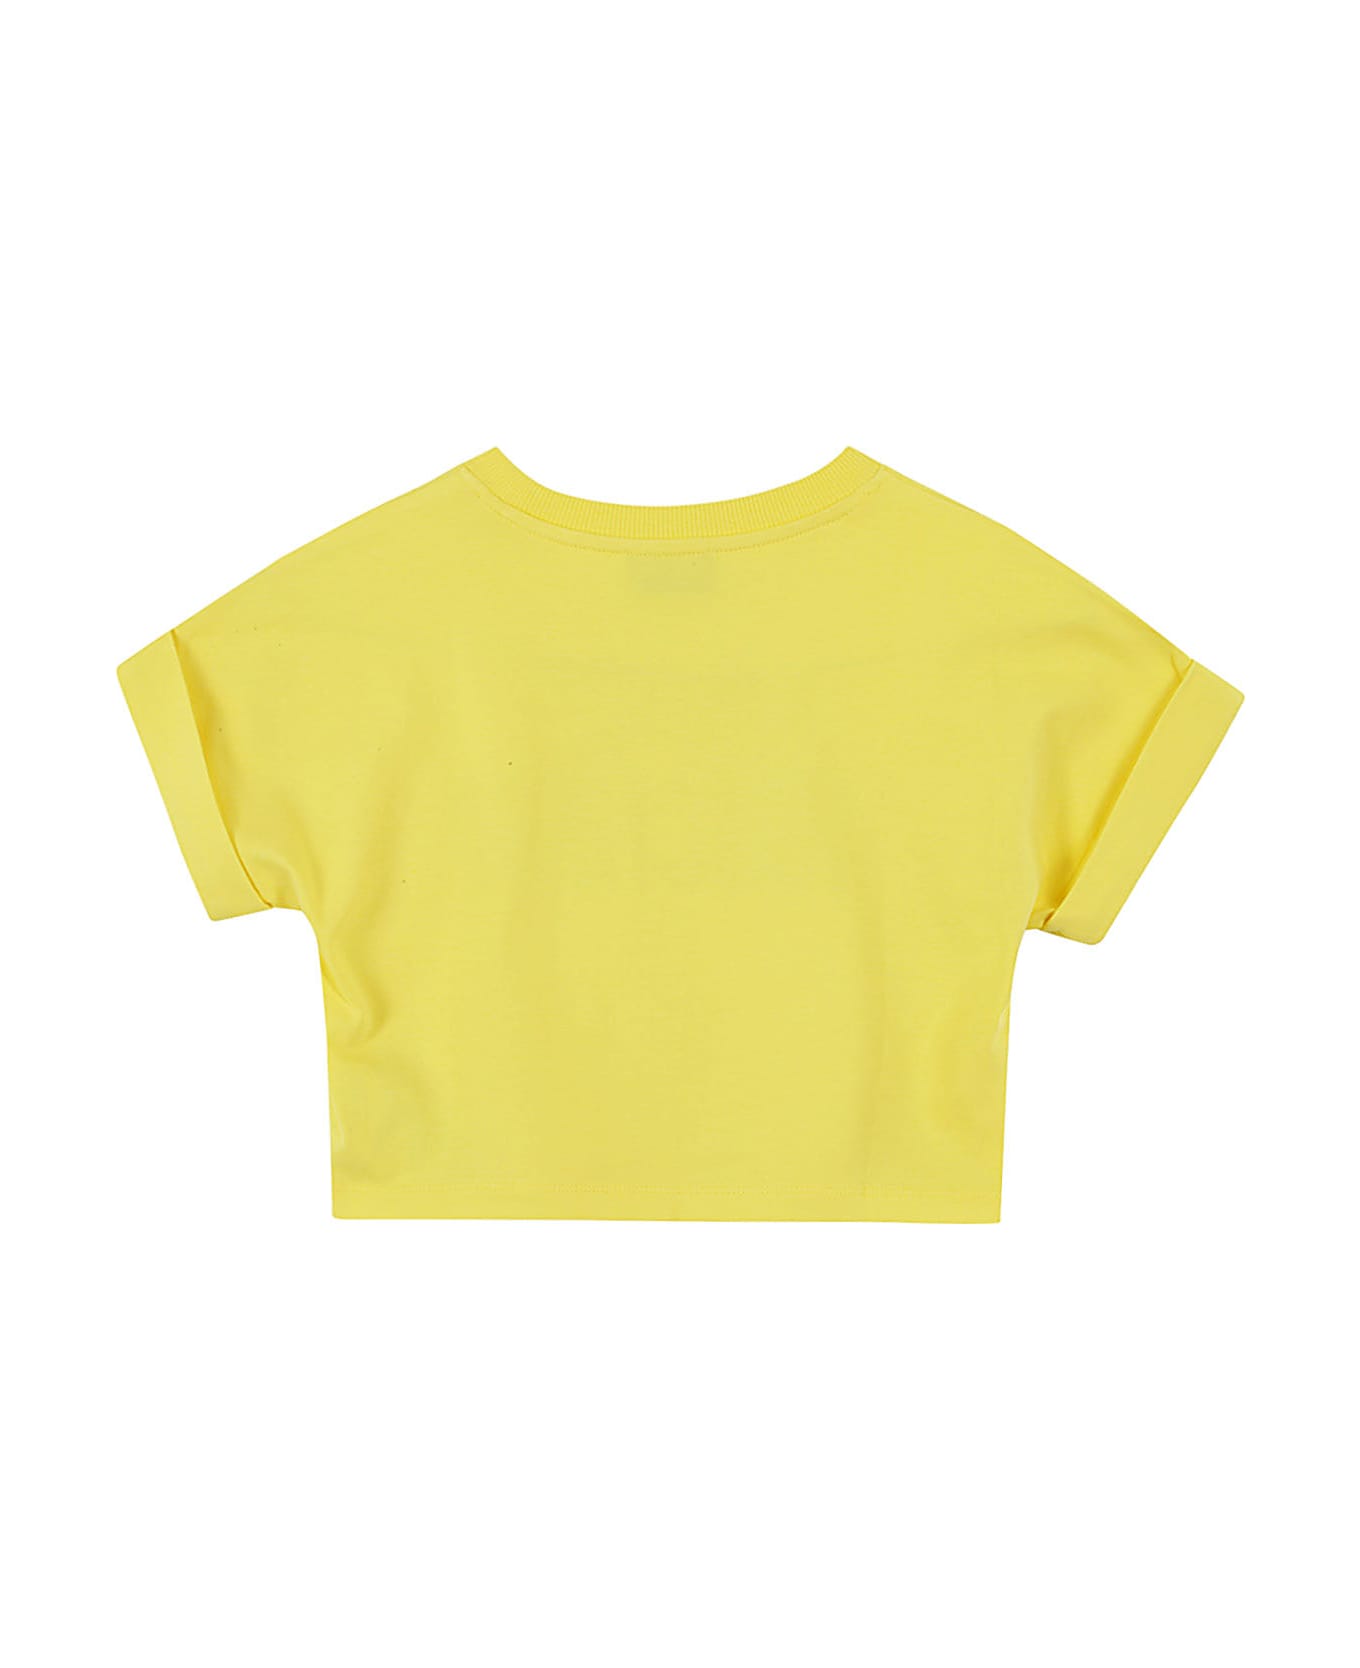 Moschino Tshirt Addition - Cyber Yellow Tシャツ＆ポロシャツ